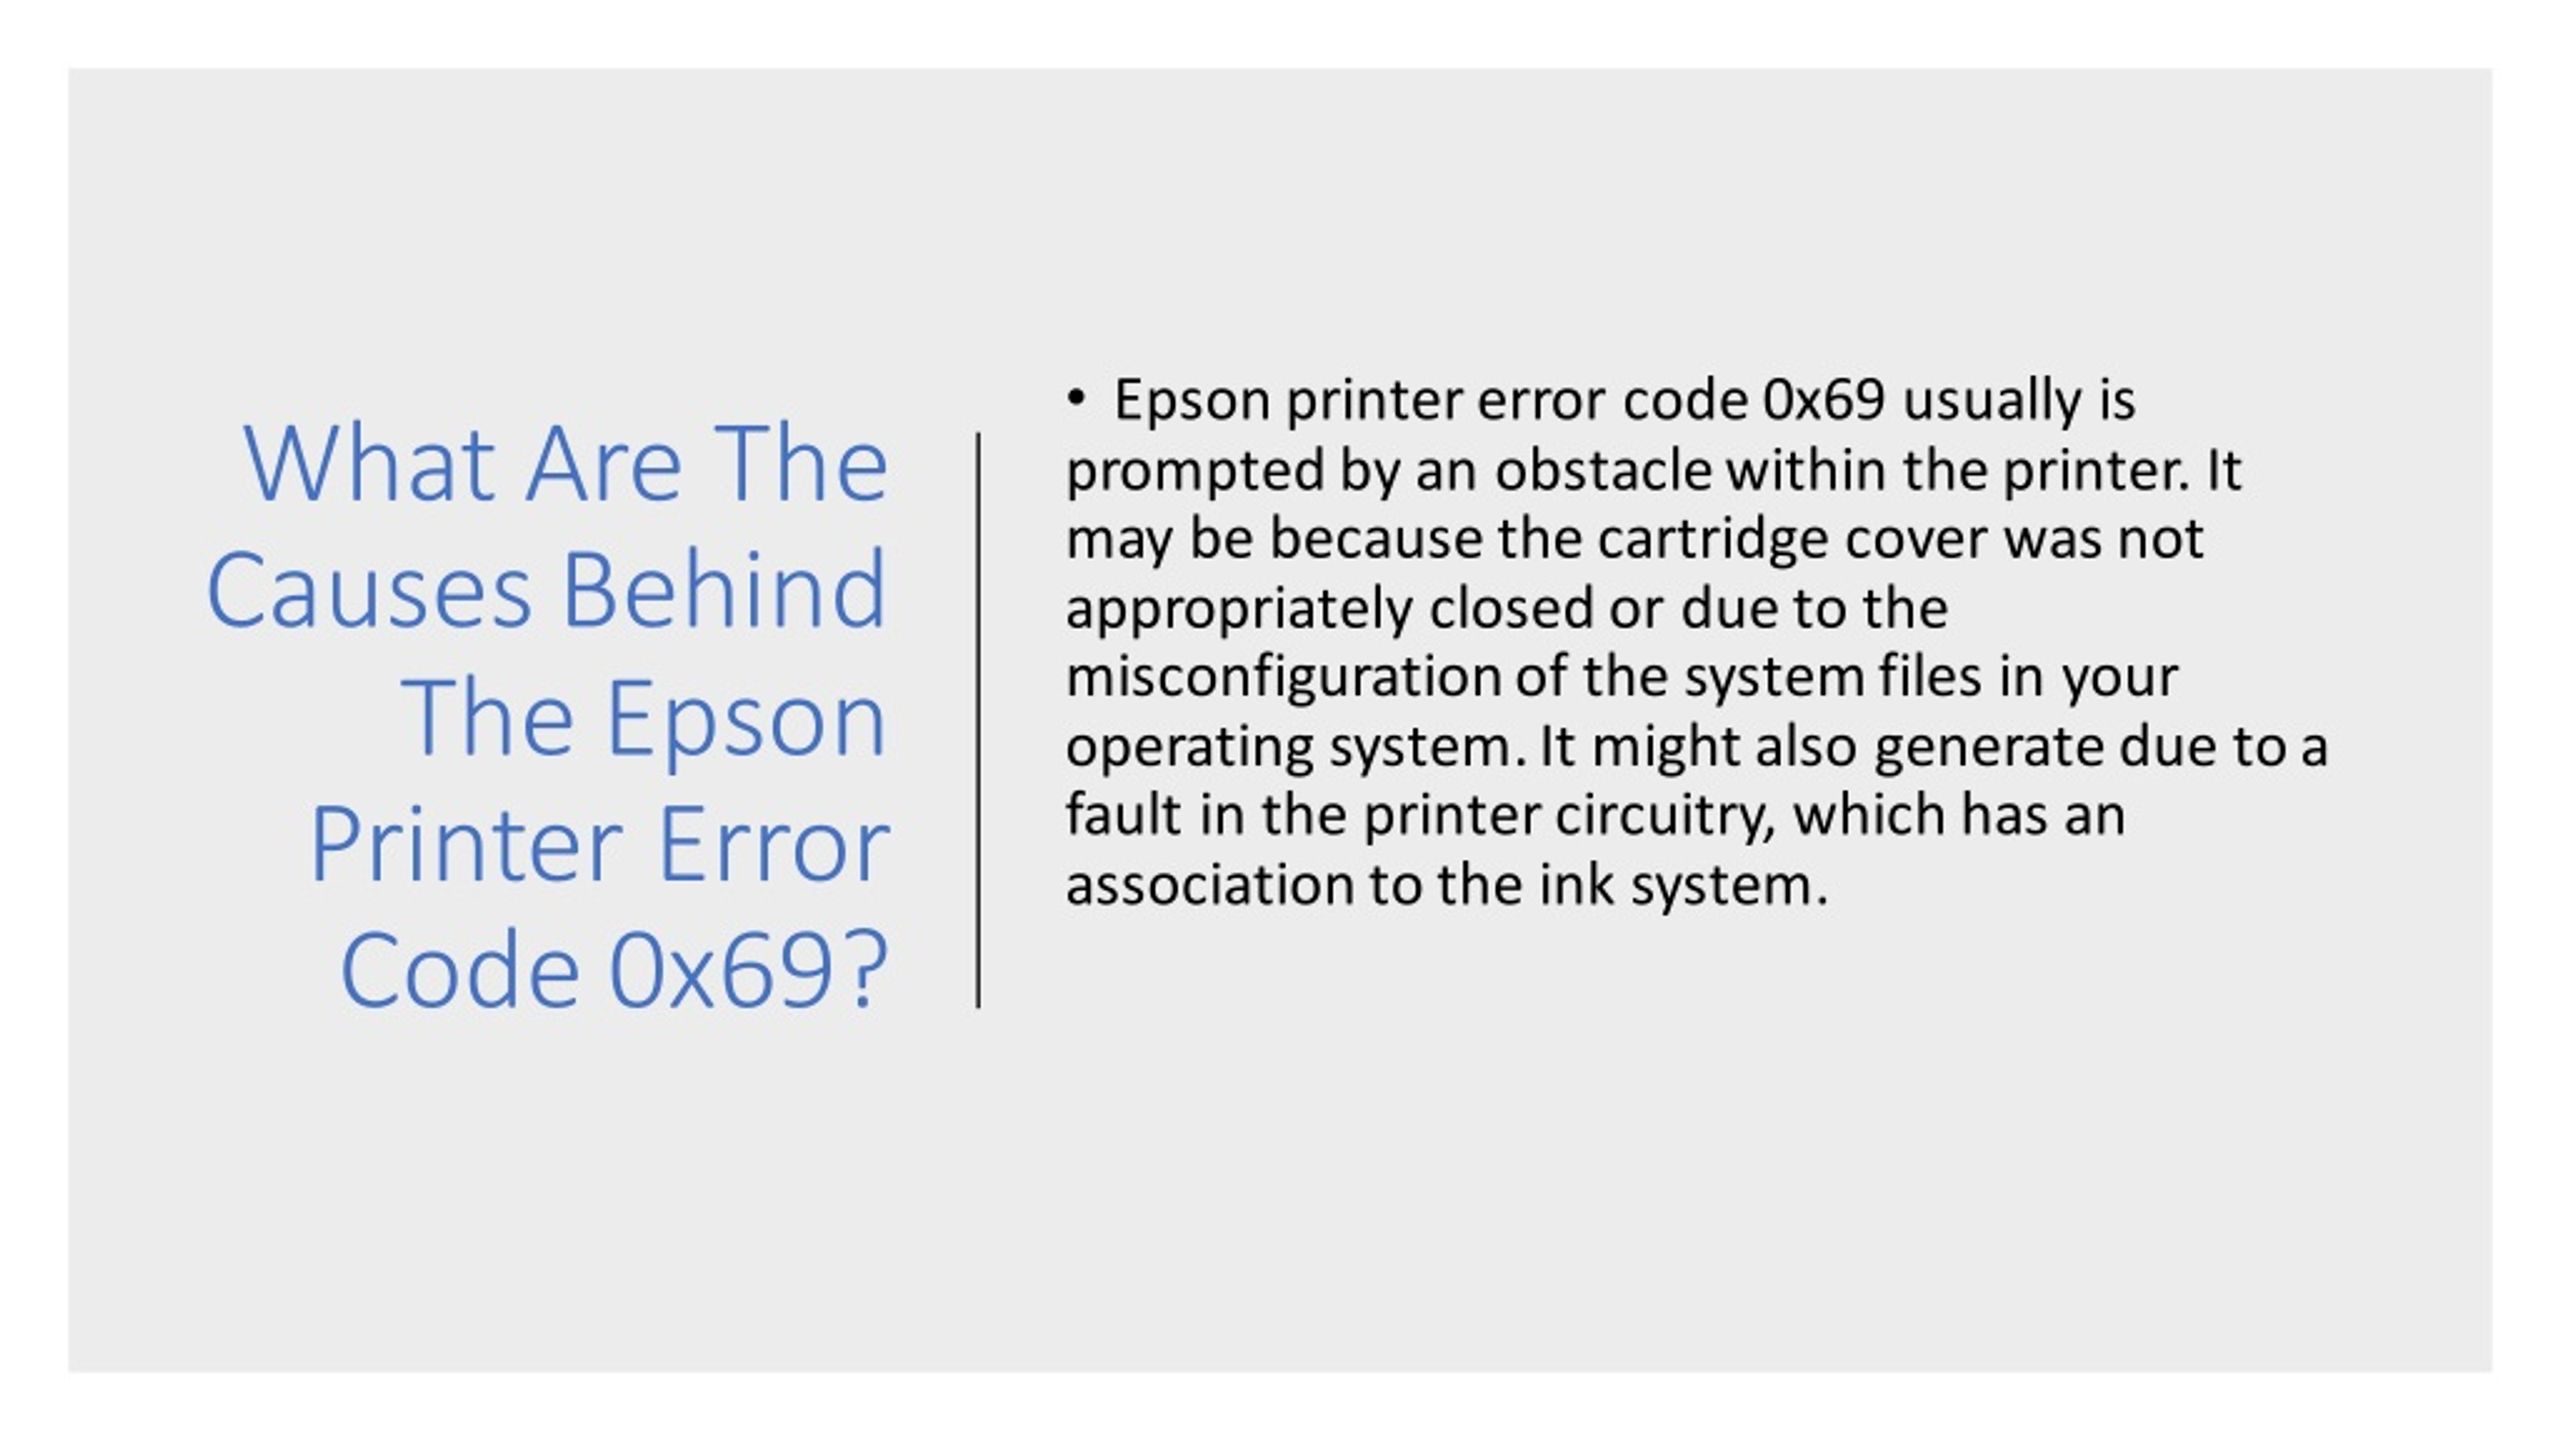 Ppt Steps To Fix Epson Printer Error Code 0x69 Powerpoint Presentation Id8339337 5792